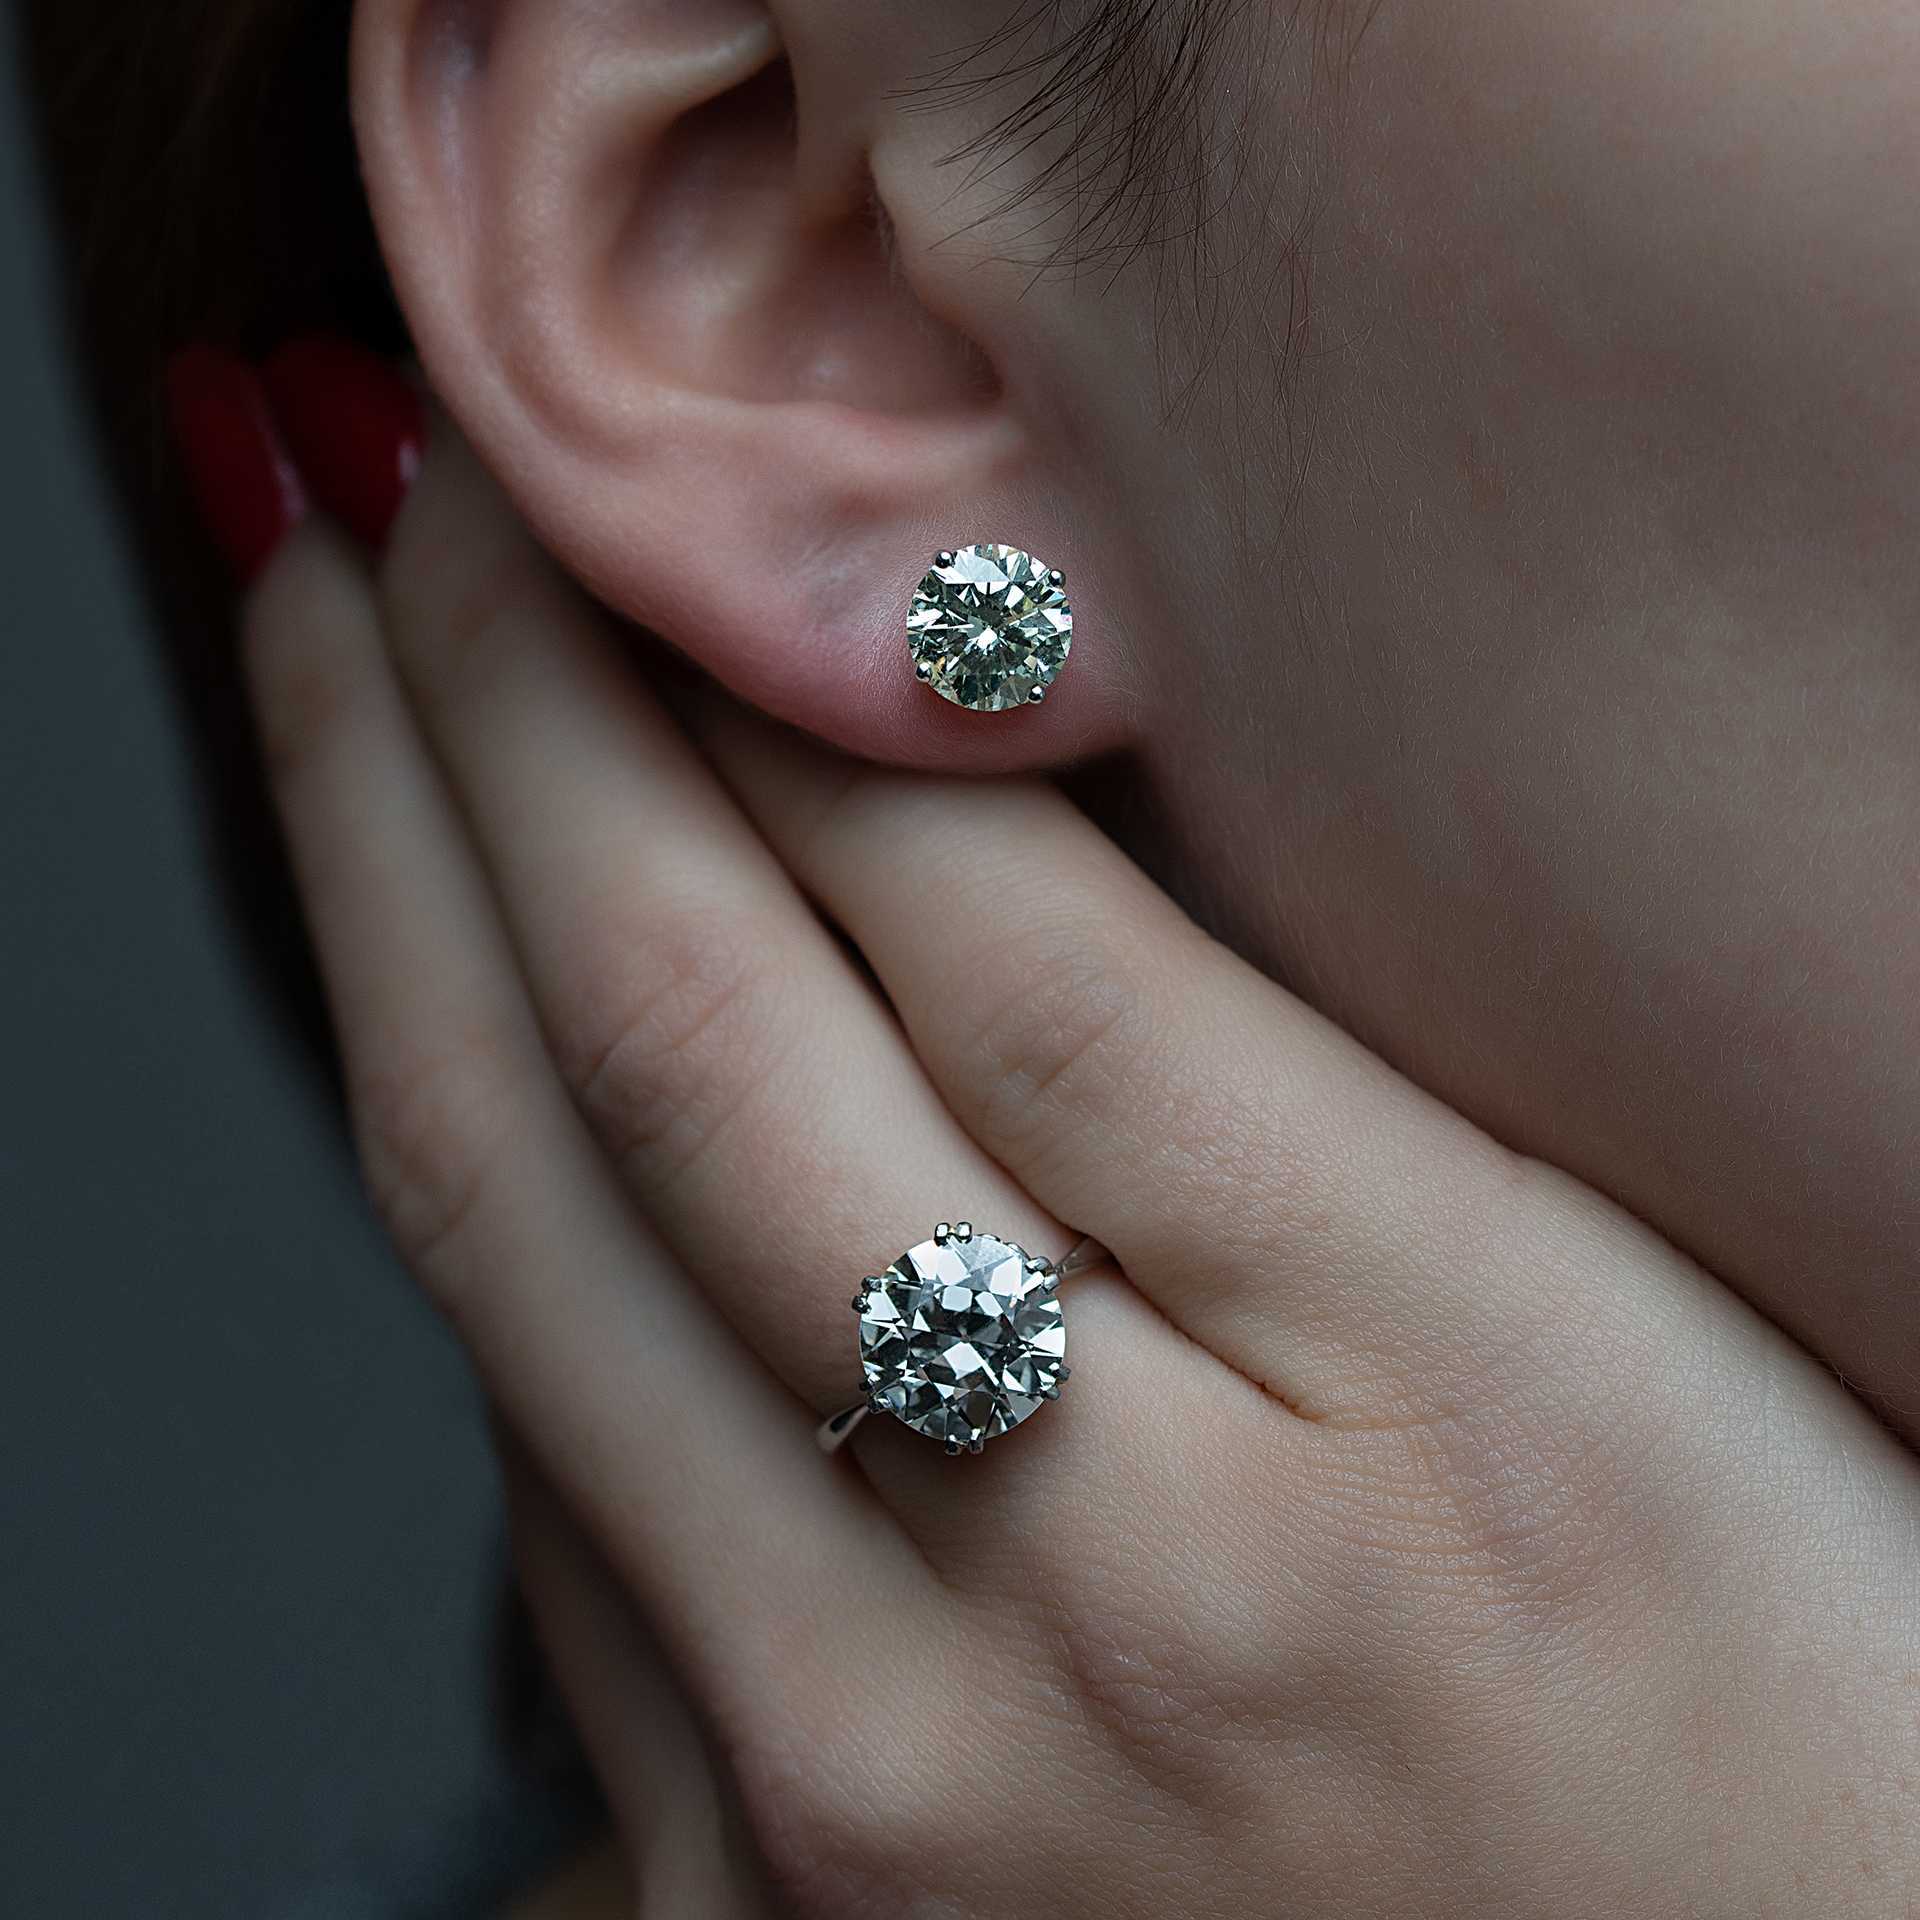 Lots 212: a pair of diamond solitaire ear studs, estimate £10,000-£15,000; lot 218: an impressive diamond solitaire ring, estimate £10,000-£15,000.